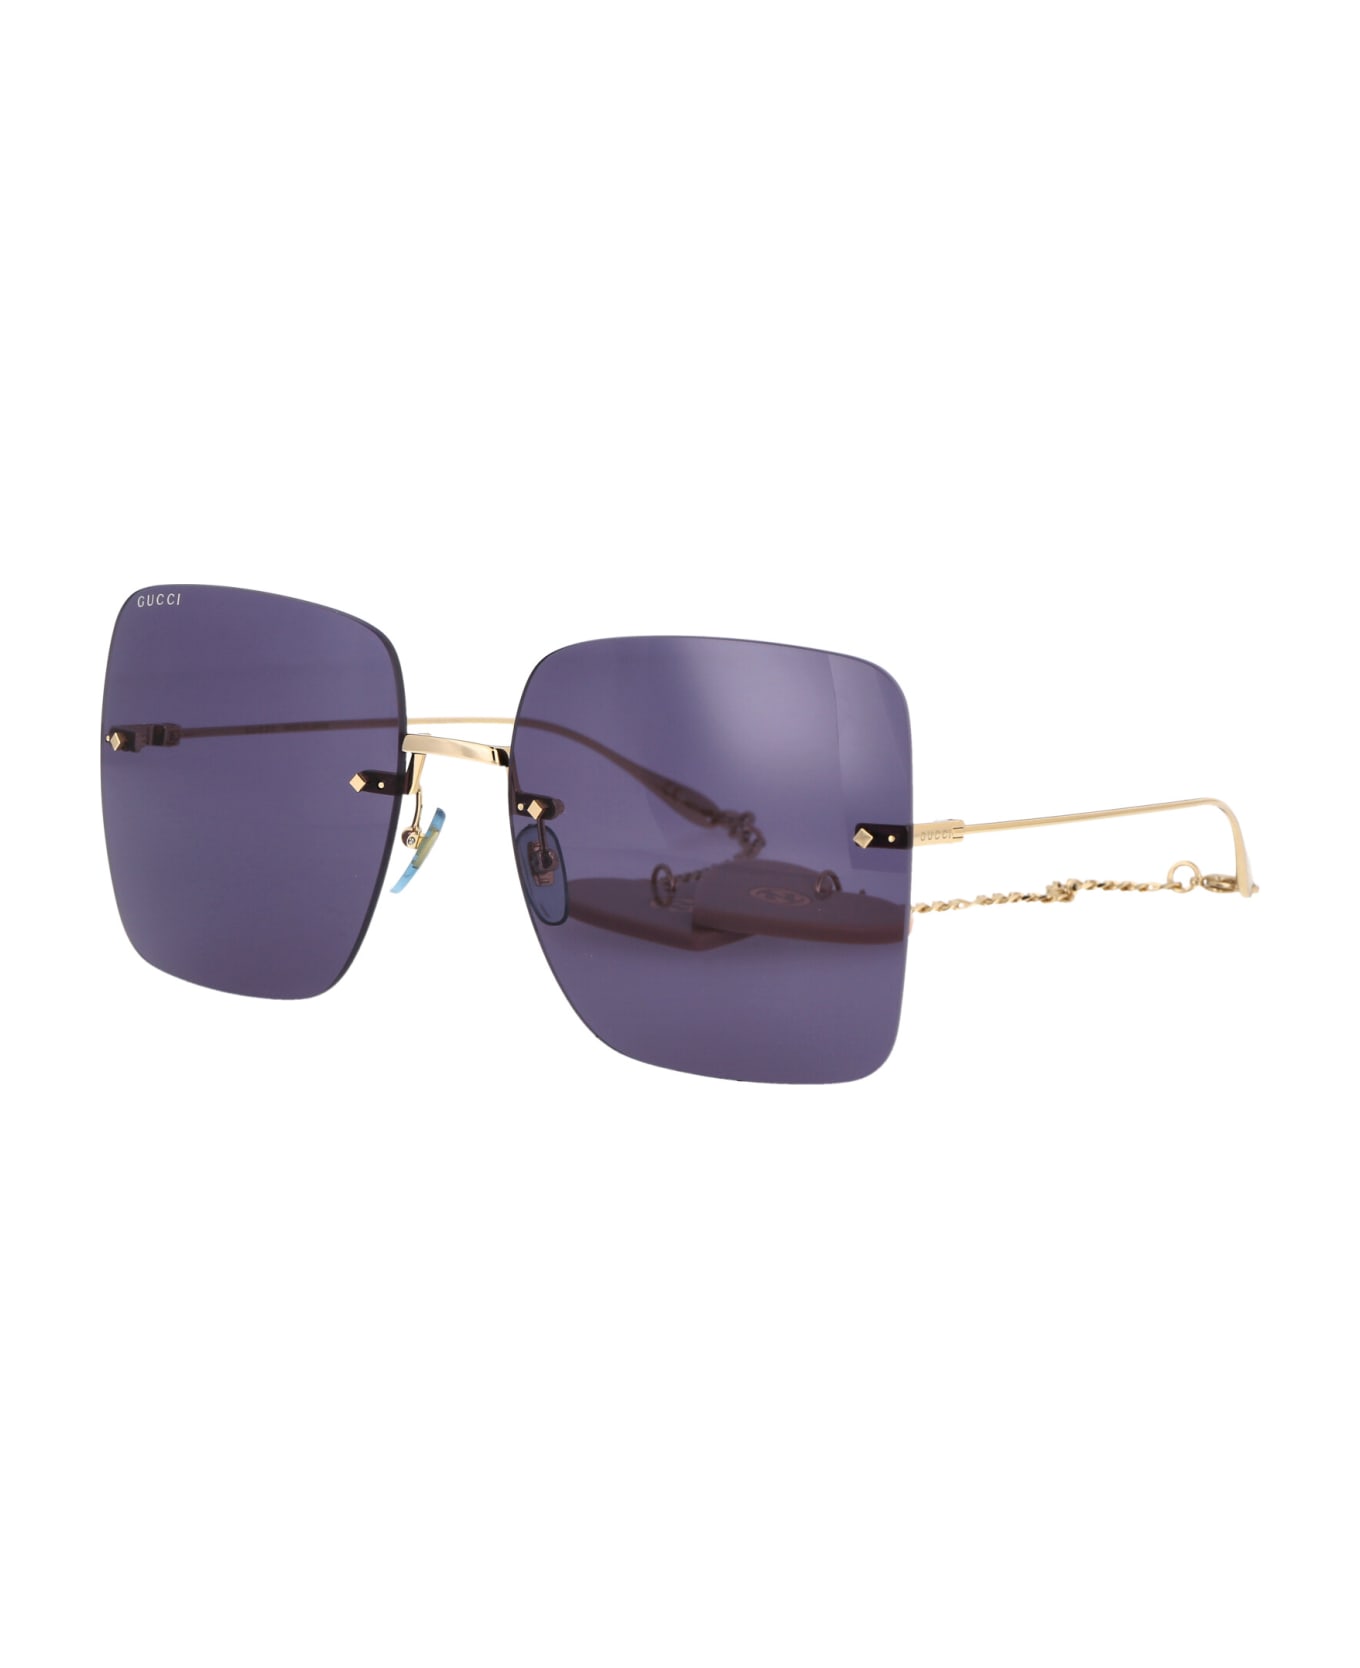 Gucci Eyewear Gg1147s Sunglasses - 004 GOLD GOLD BLUE